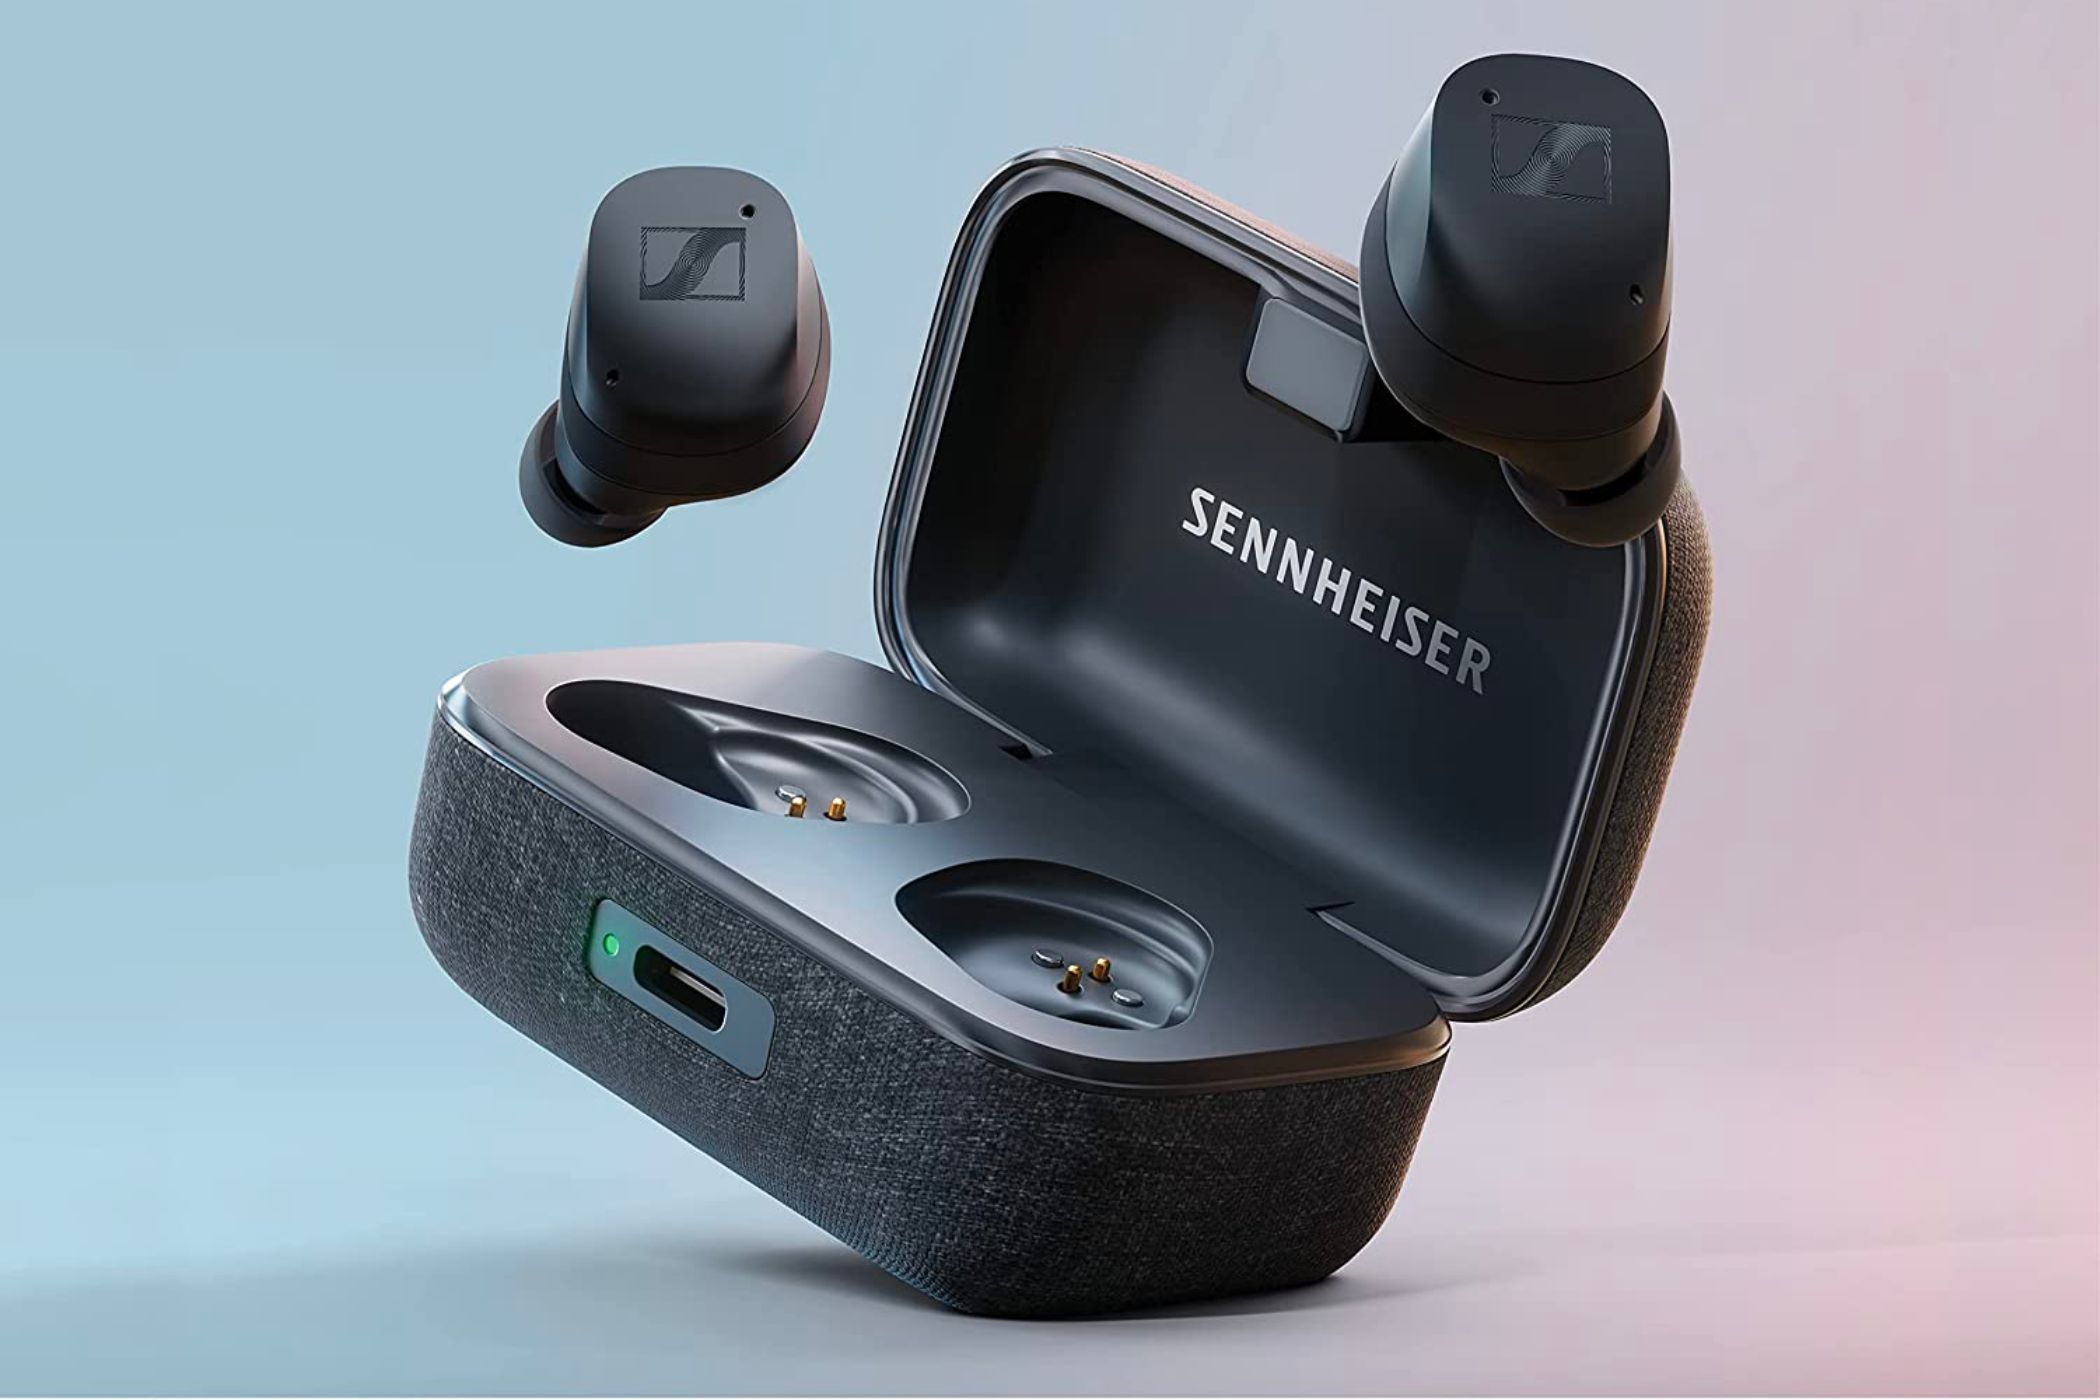 An image showing the Sennheiser Momentum True Wireless 3 earbuds.